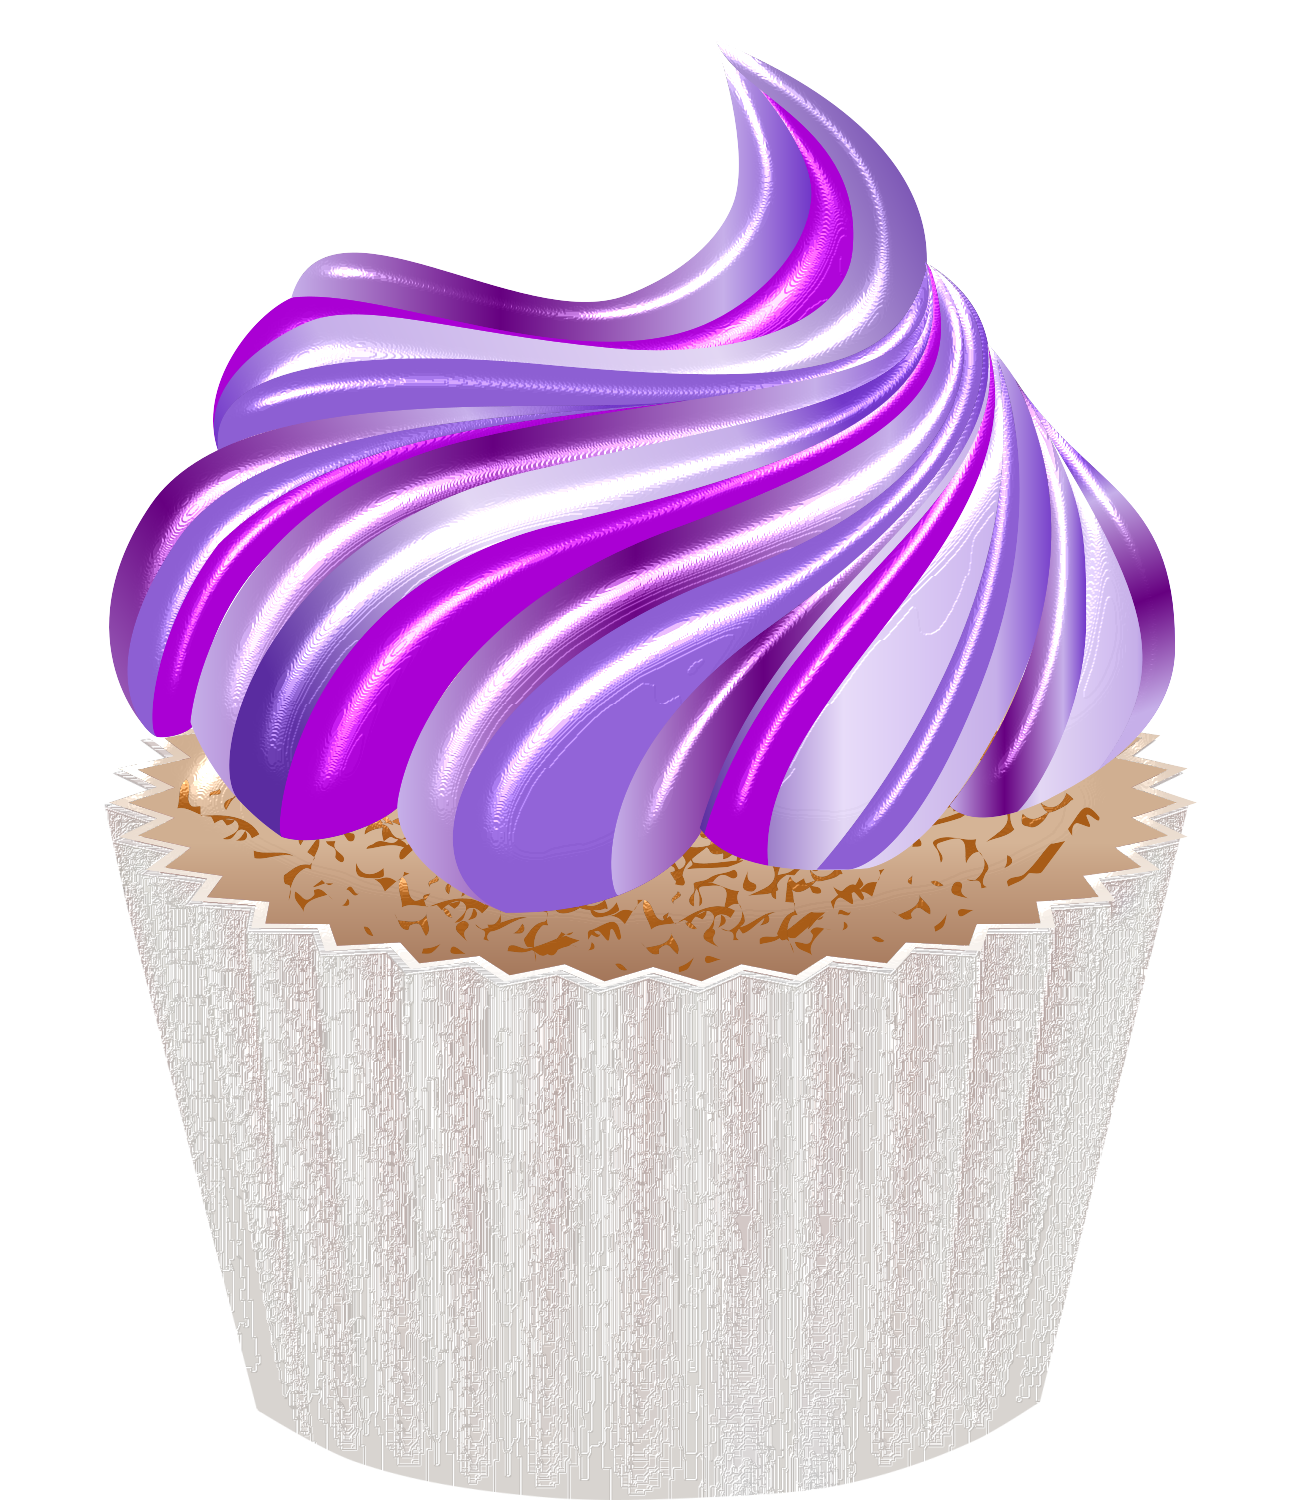  cupcake pinterest clip. Cupcakes clipart violet cake